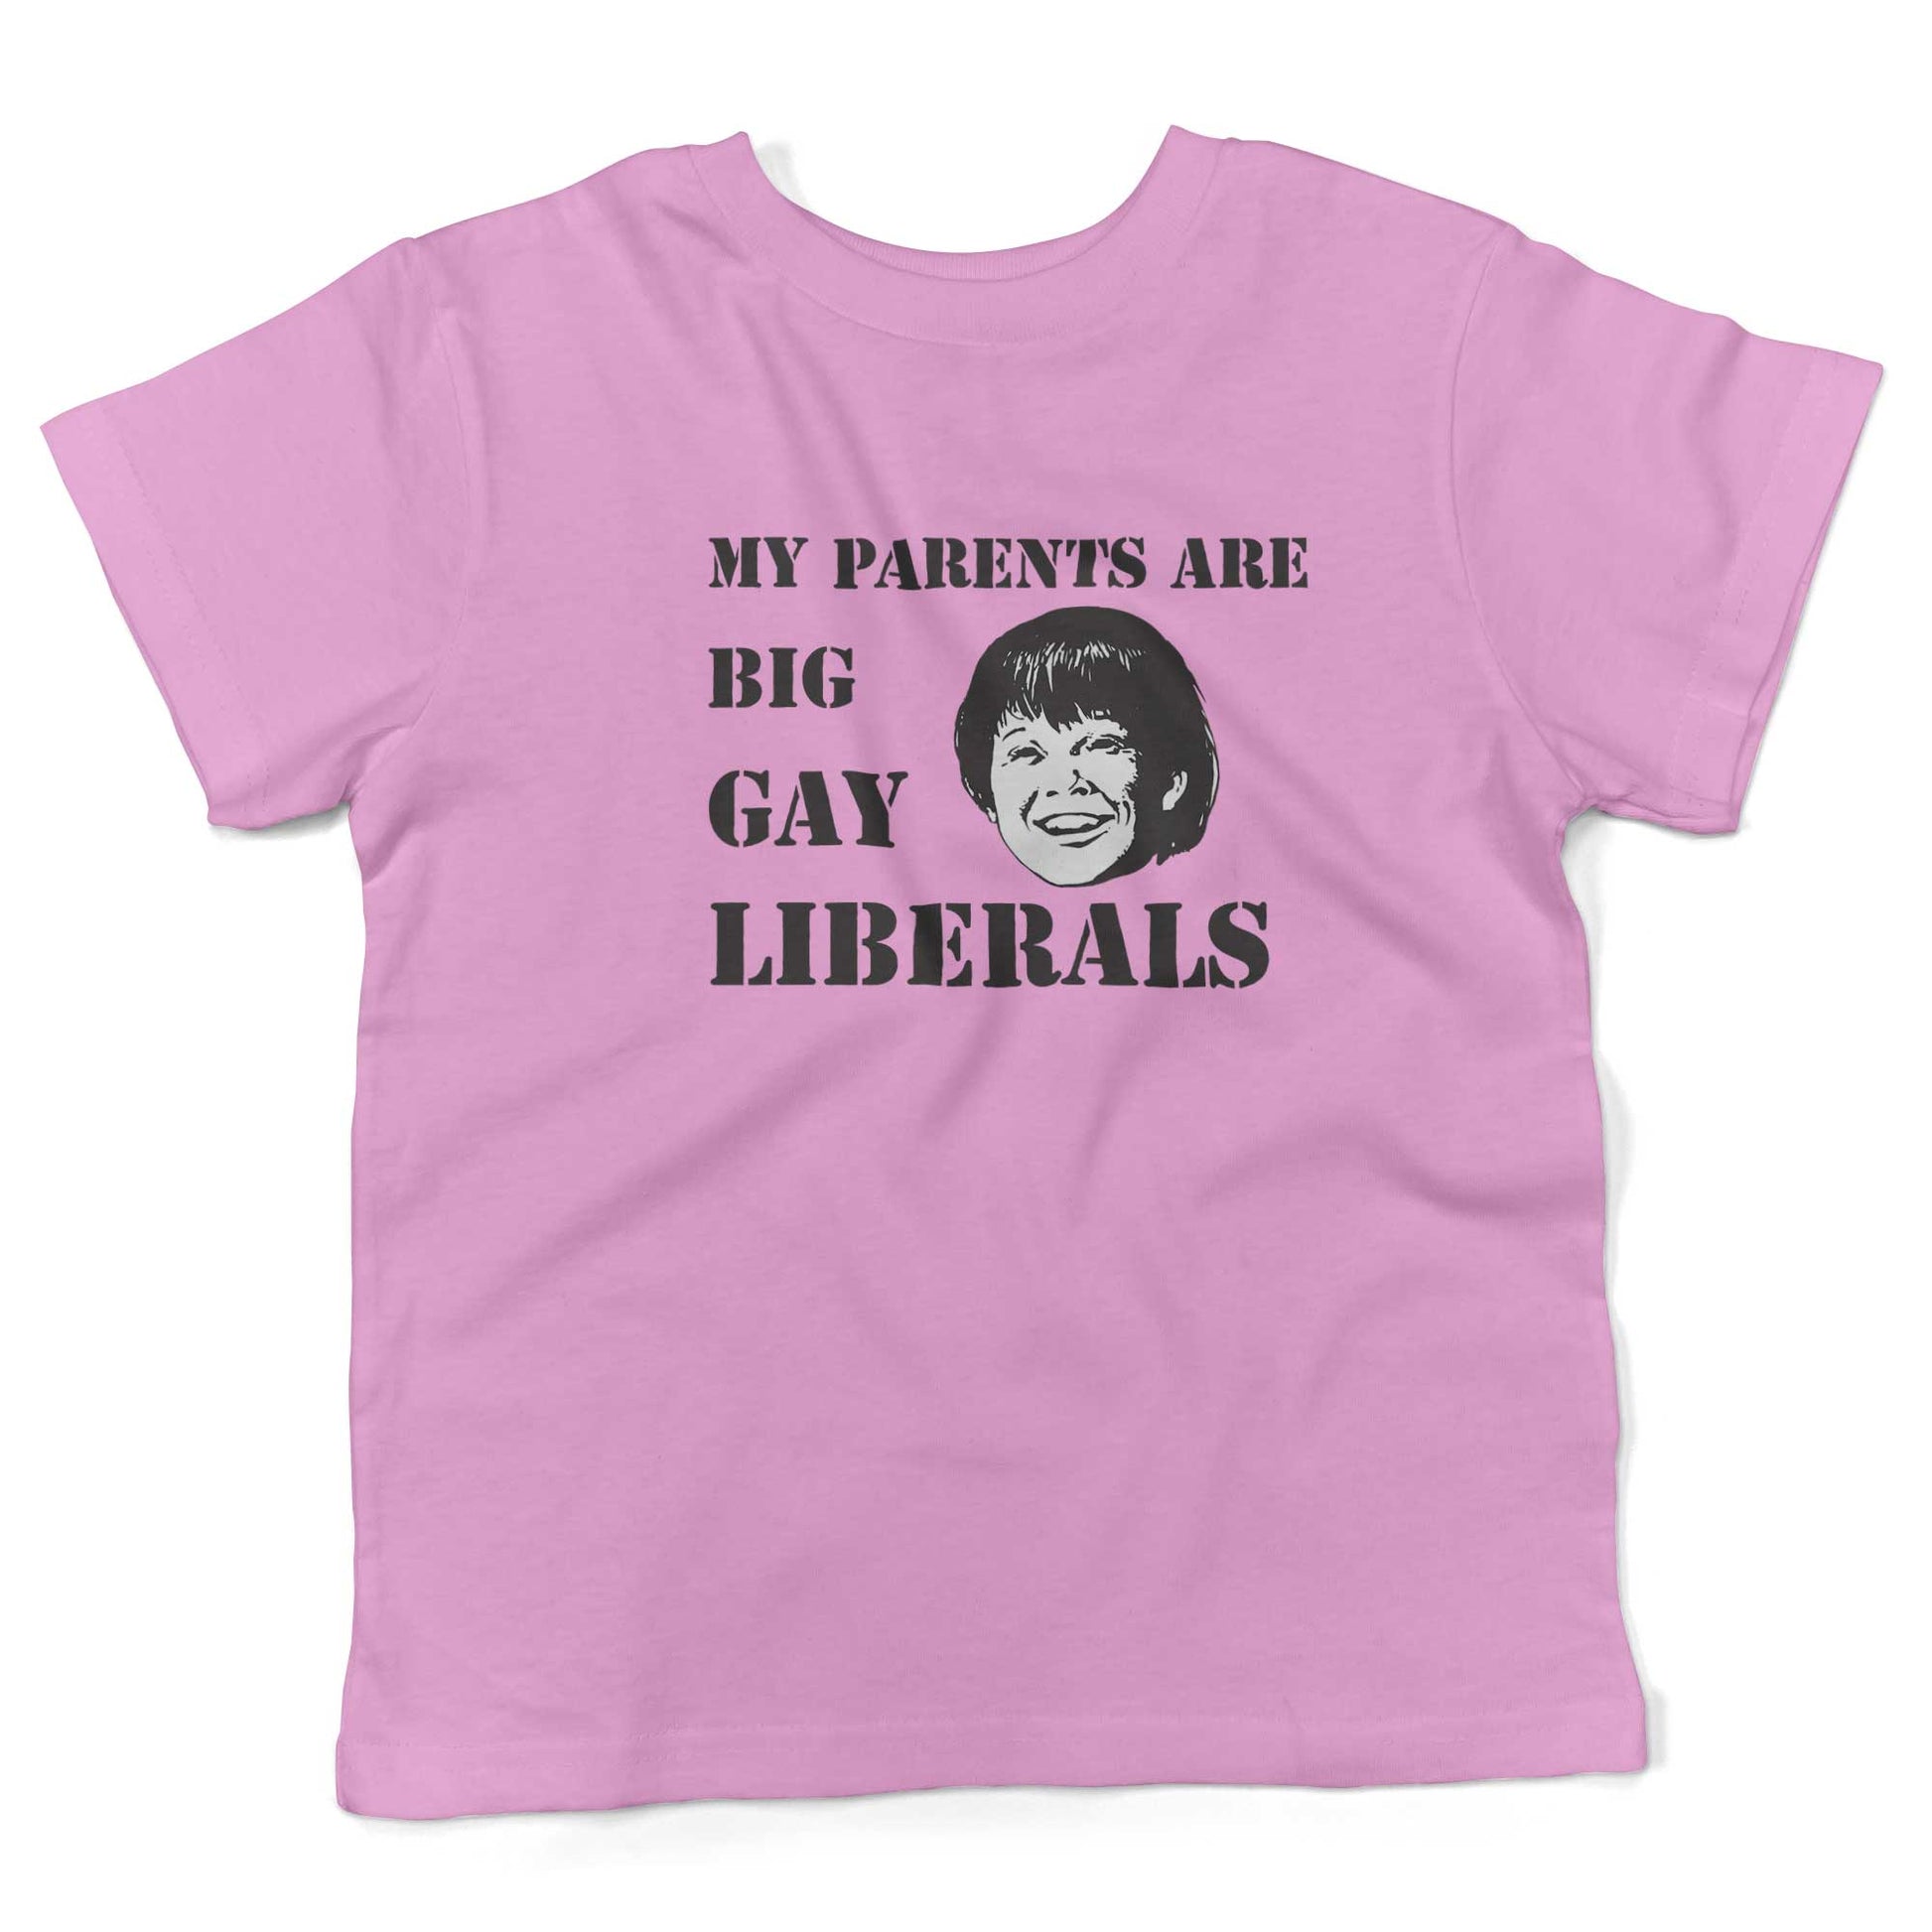 My Parents Are Big, Gay Liberals Toddler Shirt-Organic Pink-2T